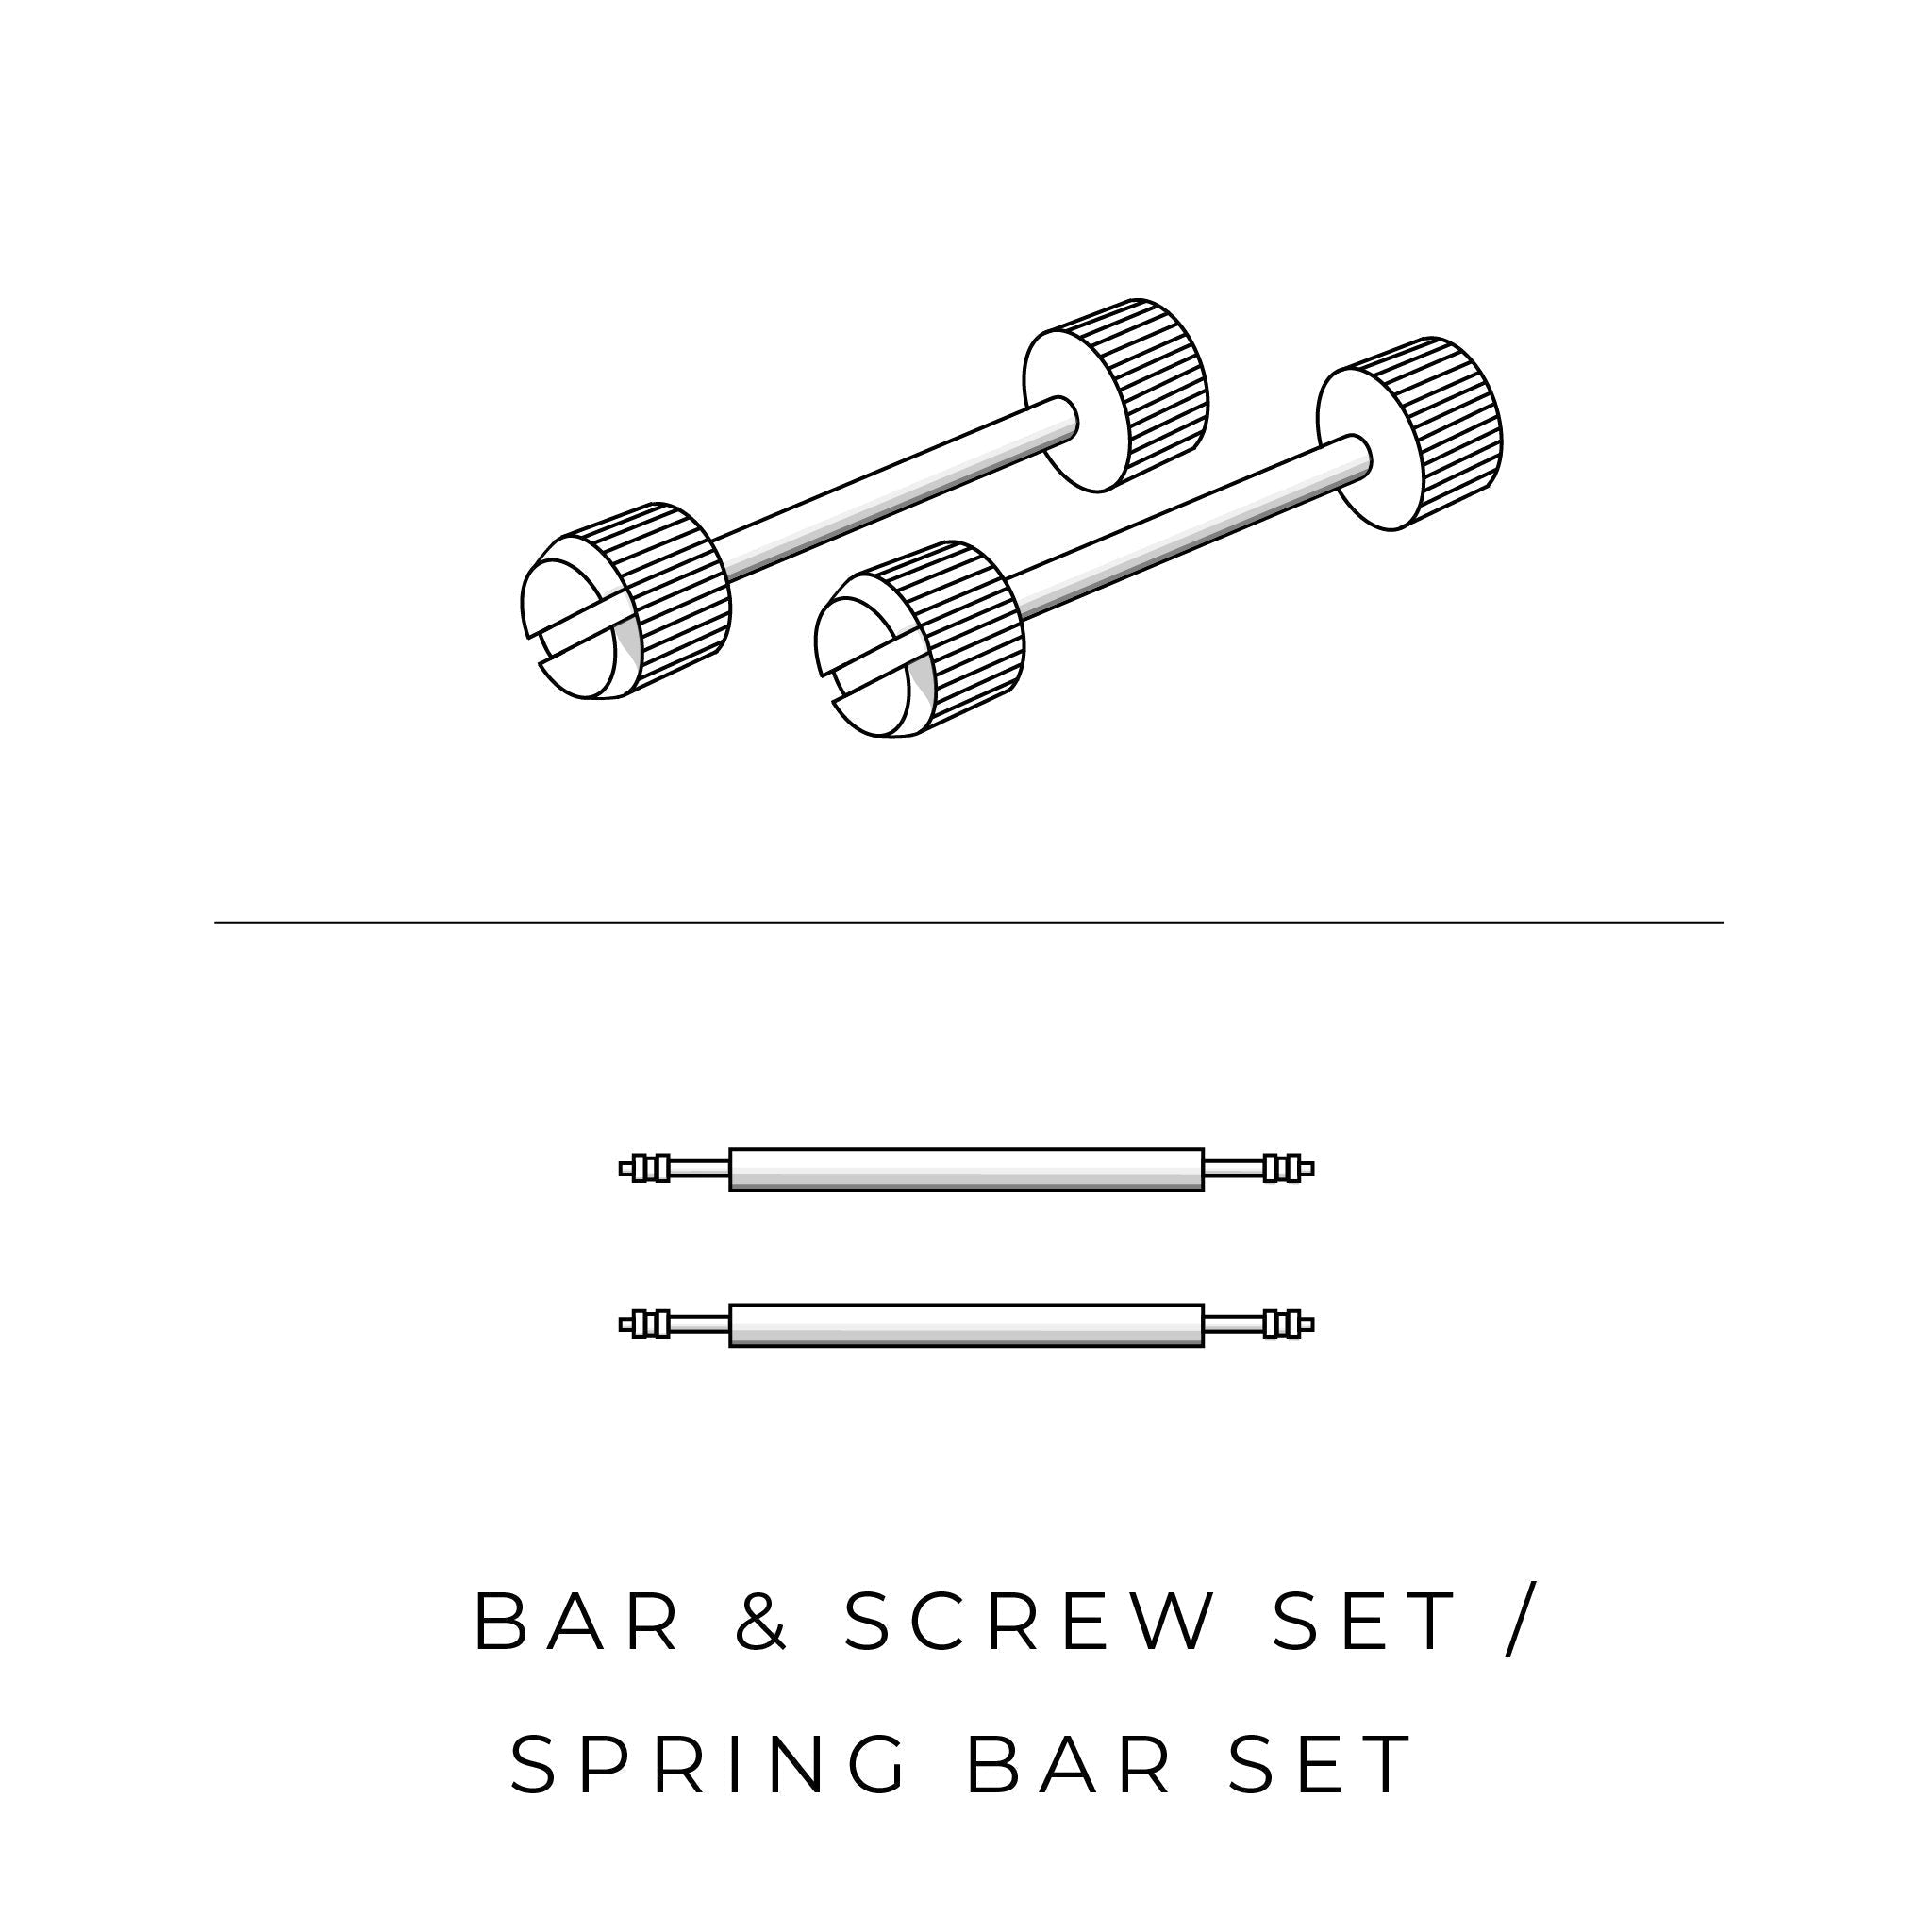 Spring Bar or T Bar Set